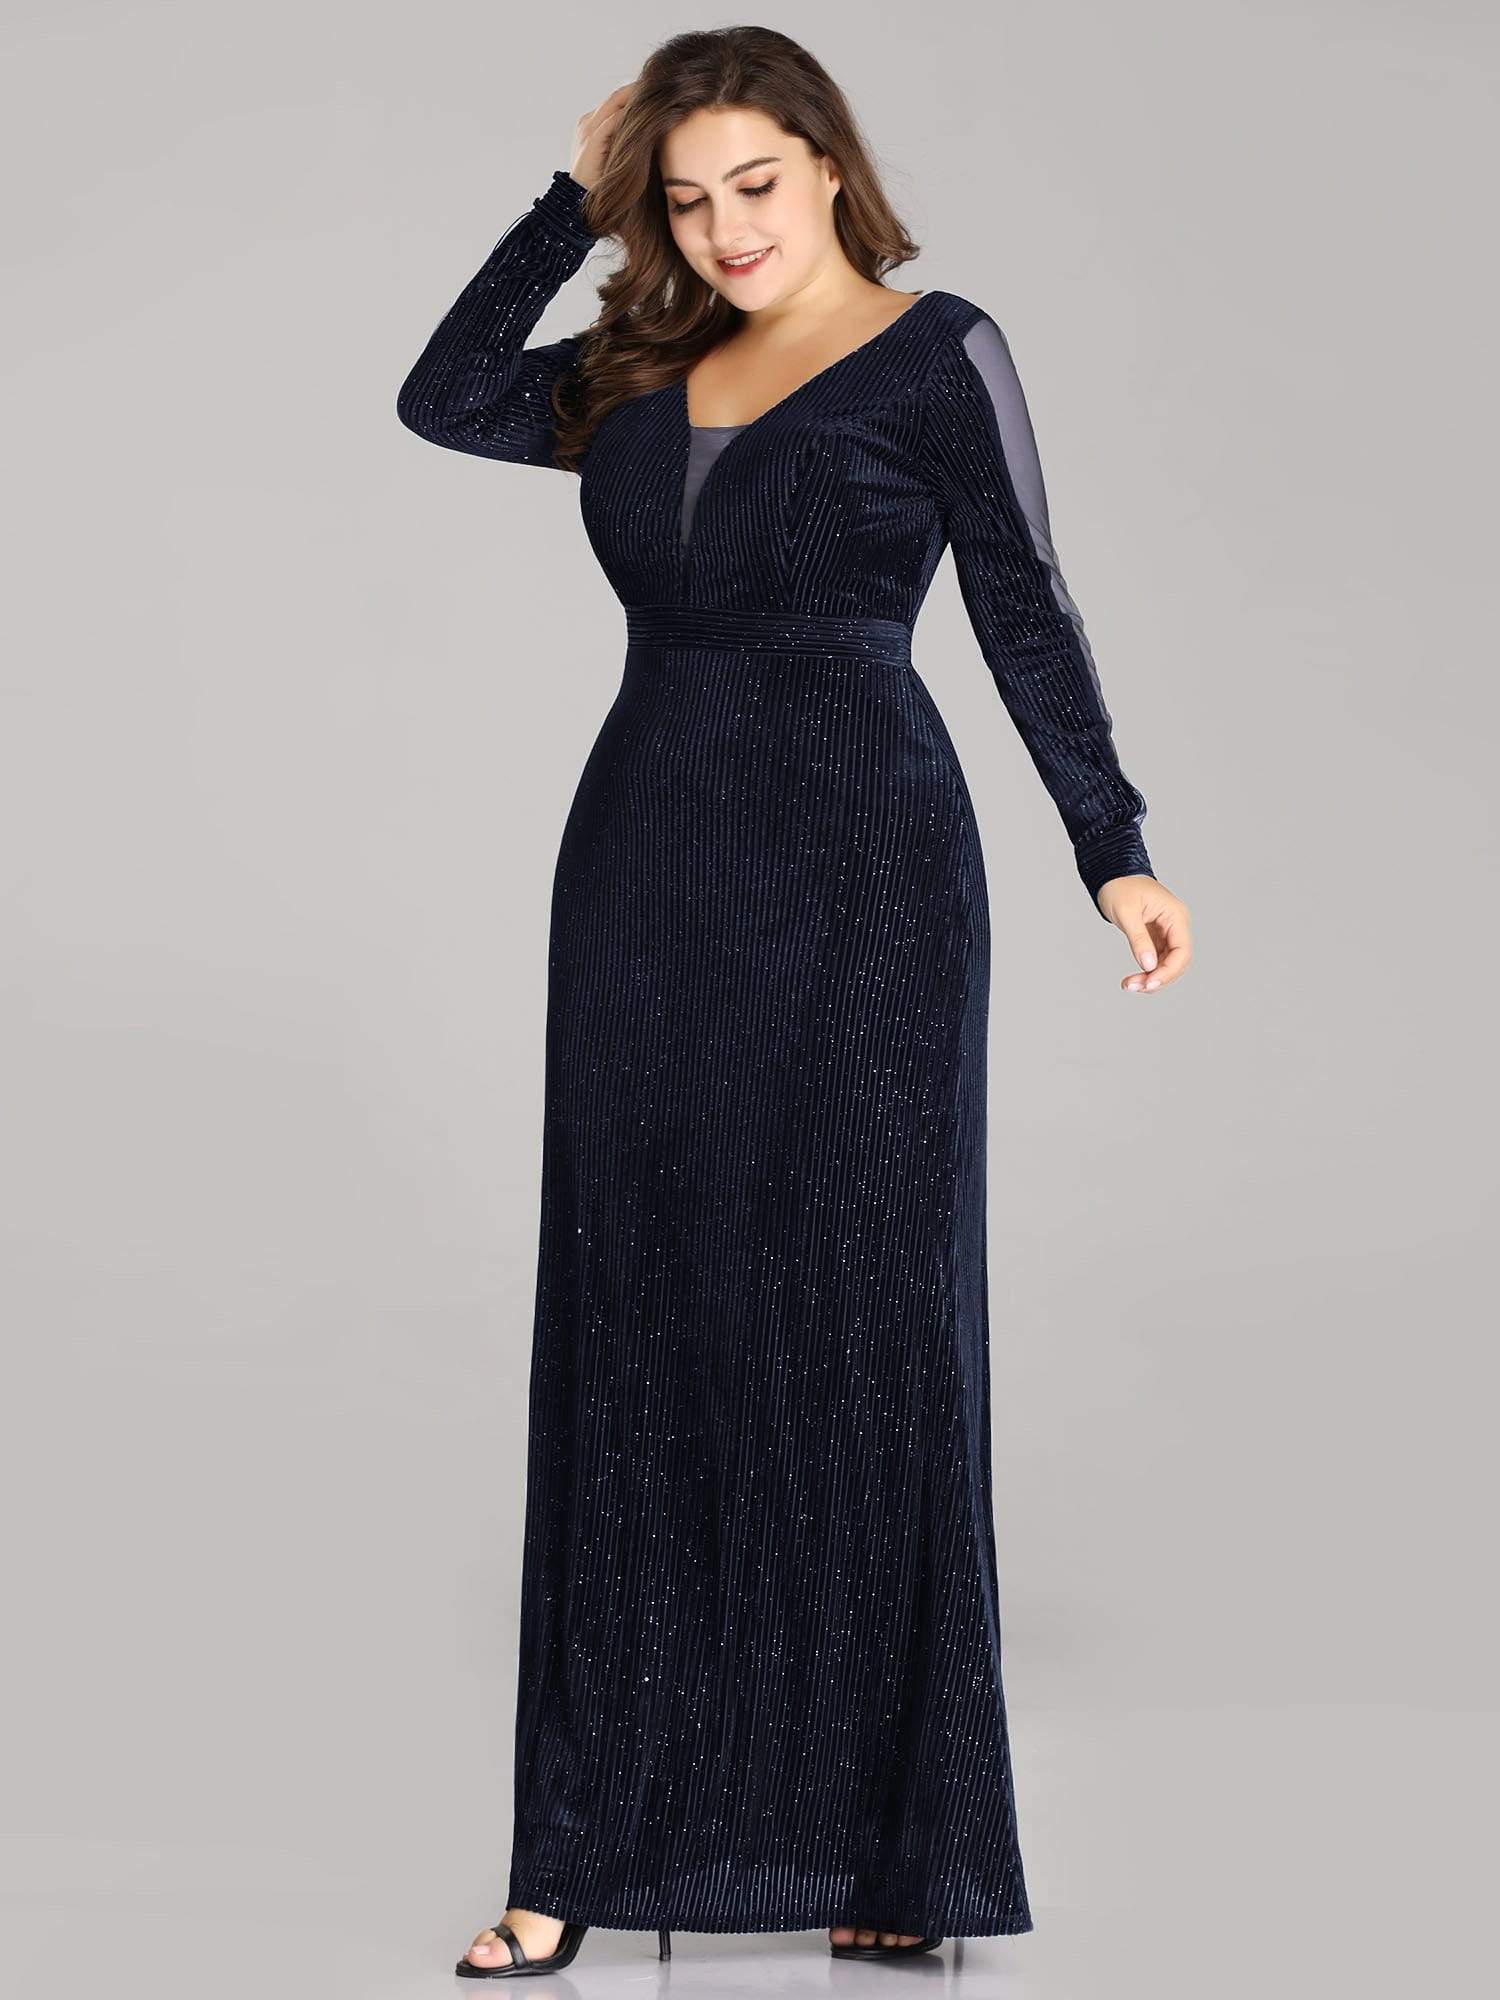 COLOR=Navy Blue | Elegant Long-Sleeve V Neck Glitter Formal Evening Dress-Navy Blue 3